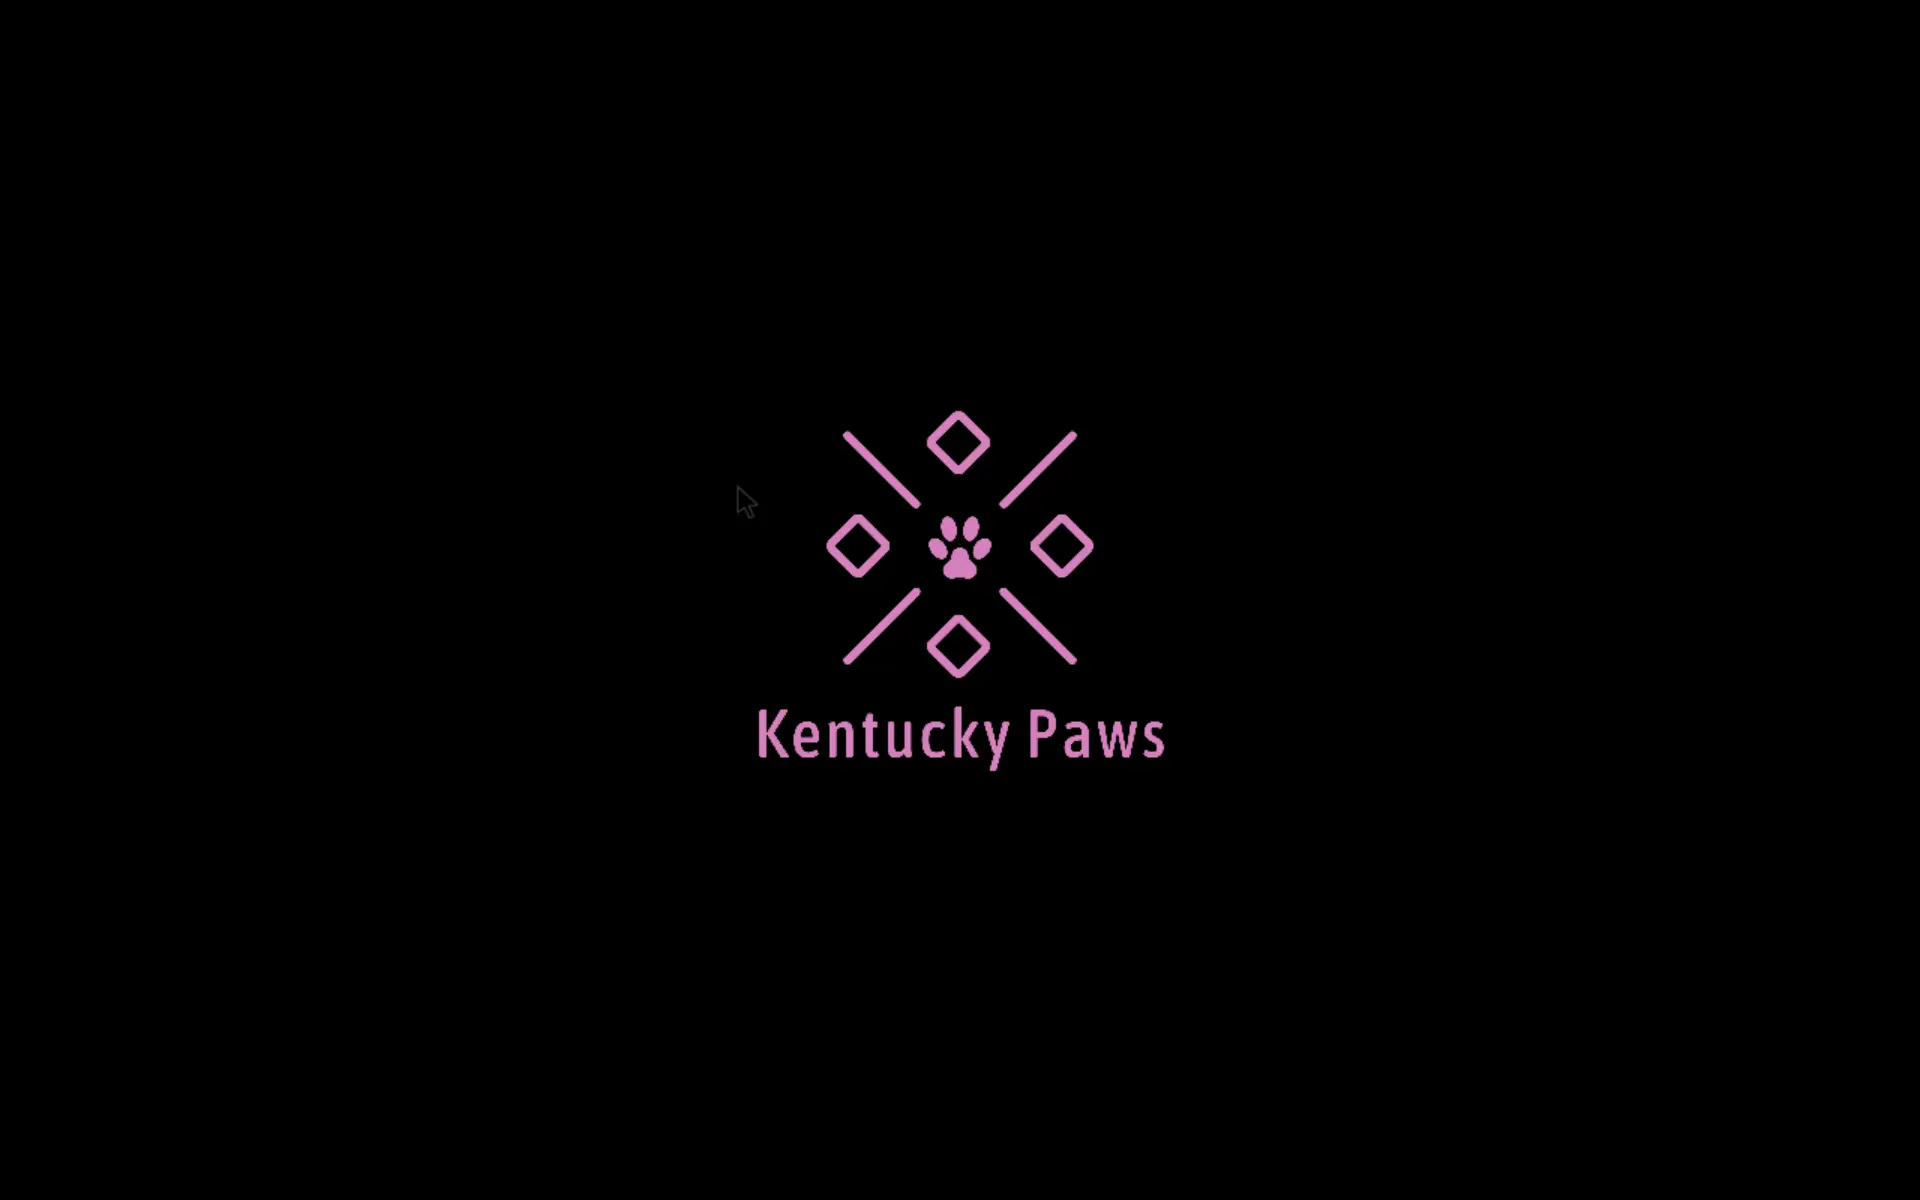 Kentucky Paws Inc